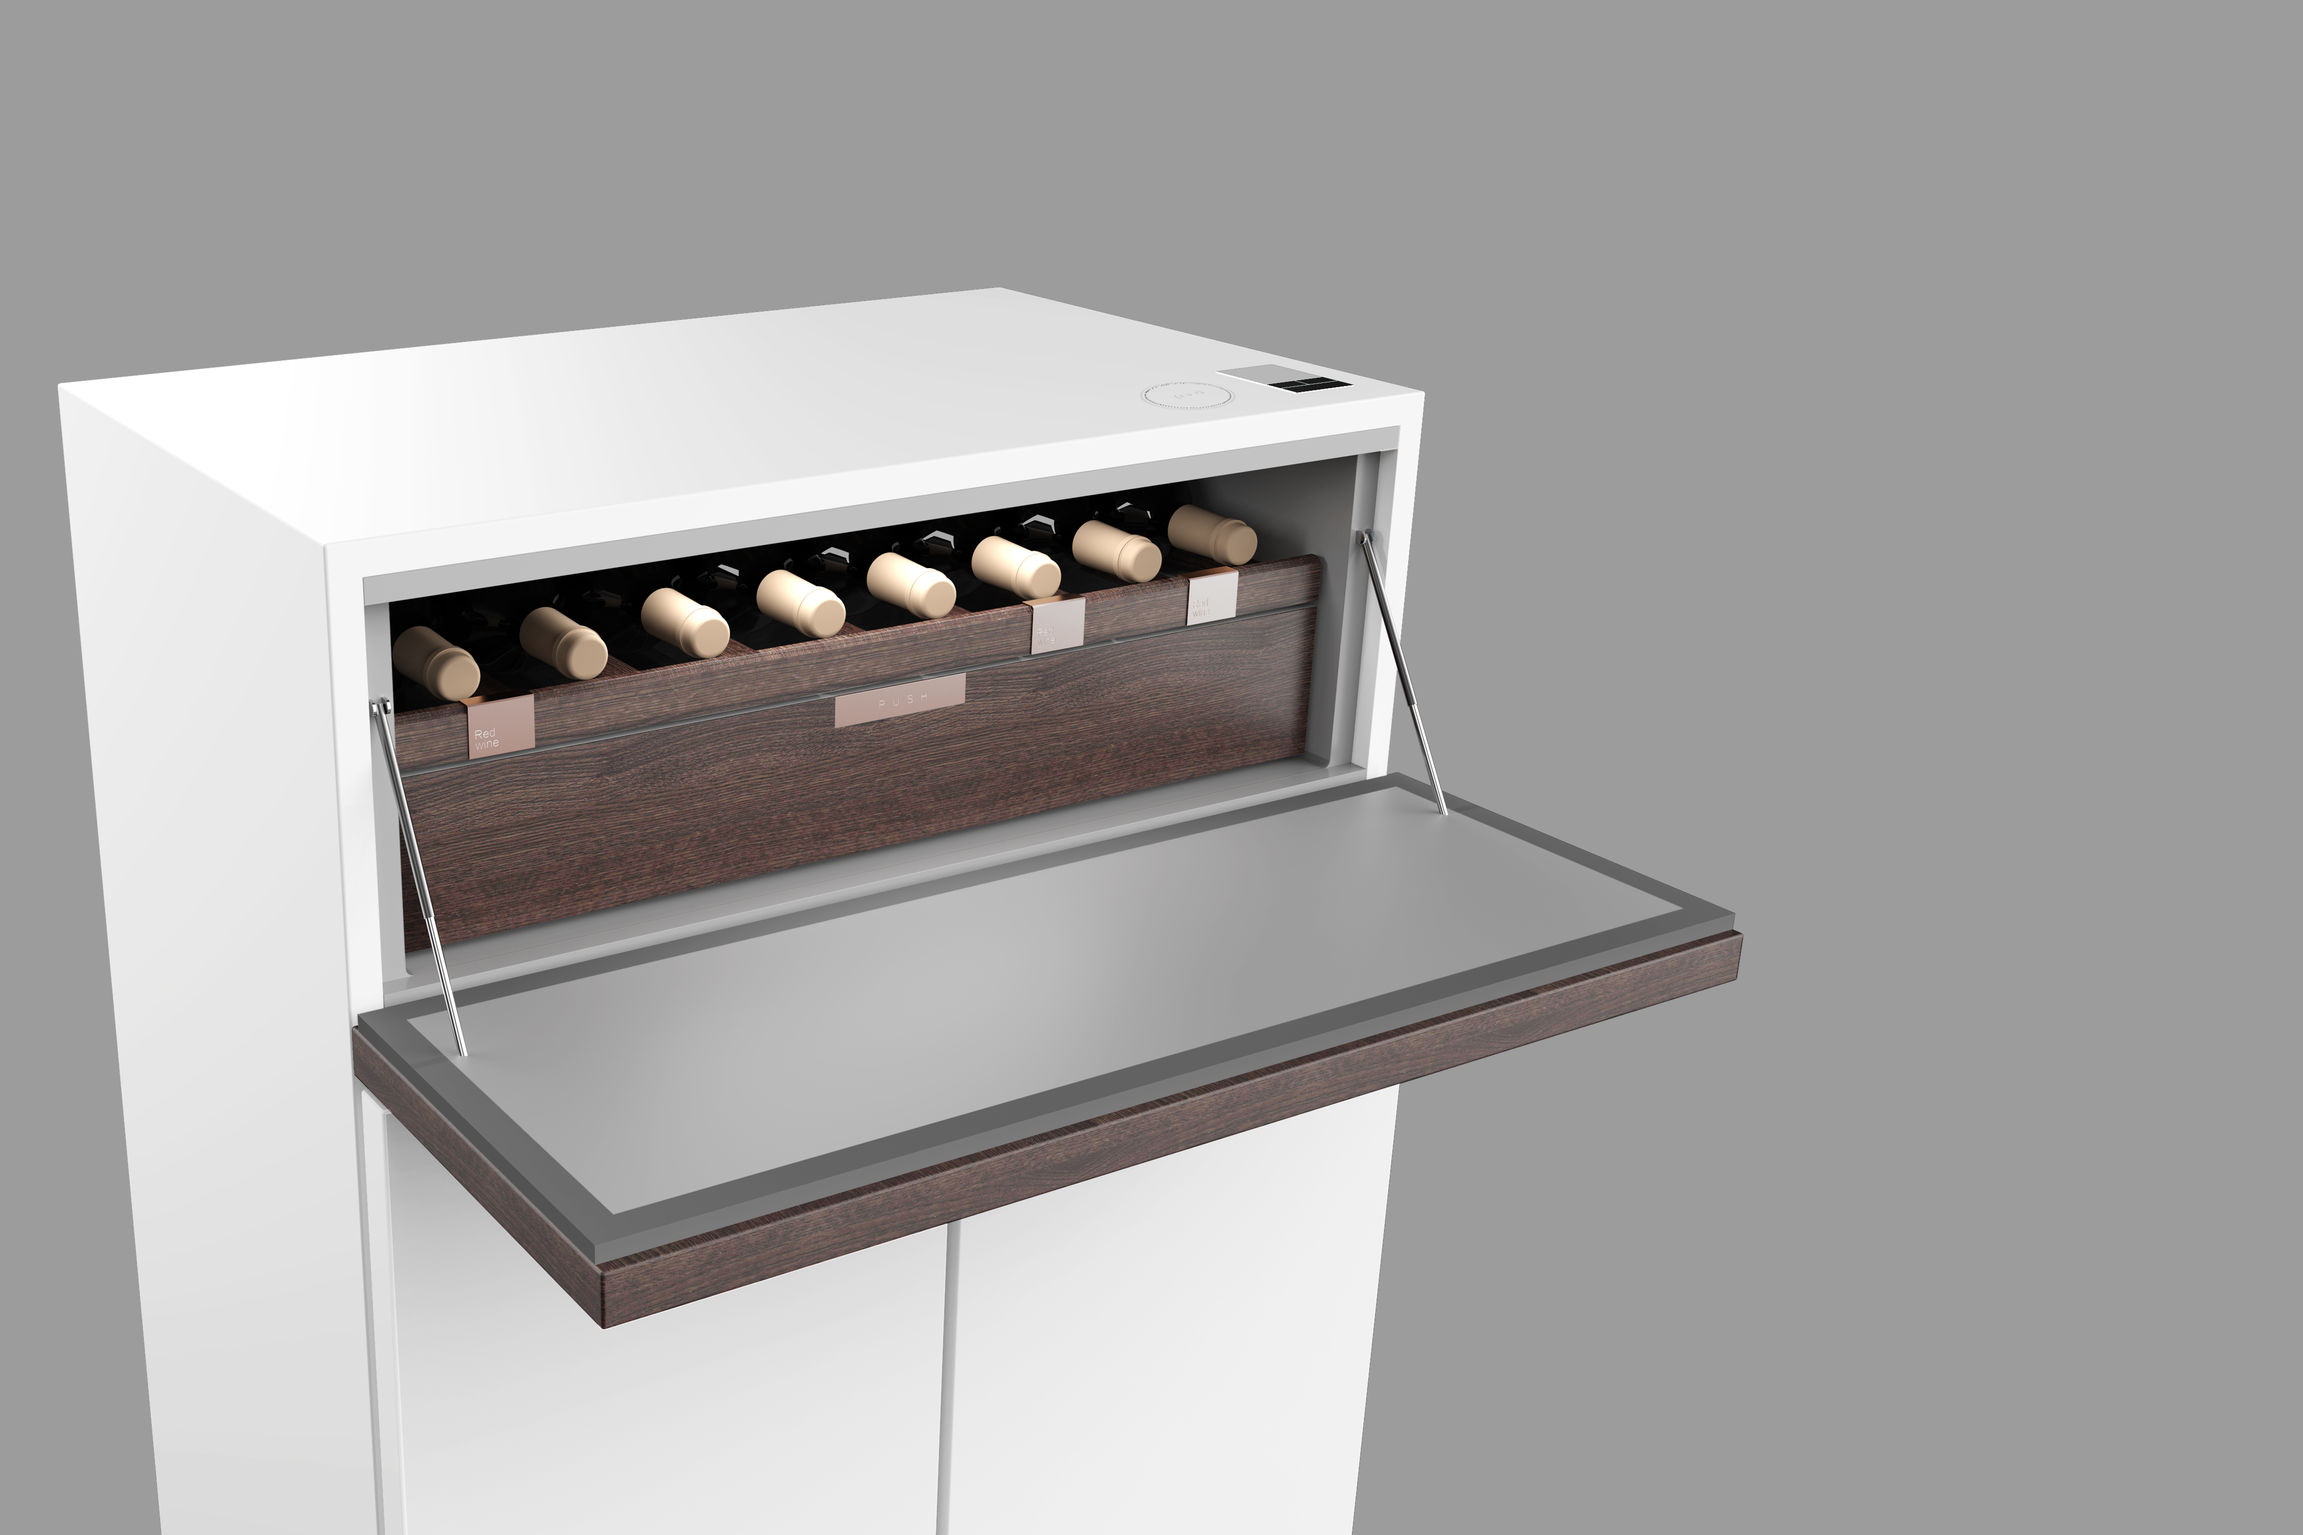 3F-New Furniture Series Refrigerator